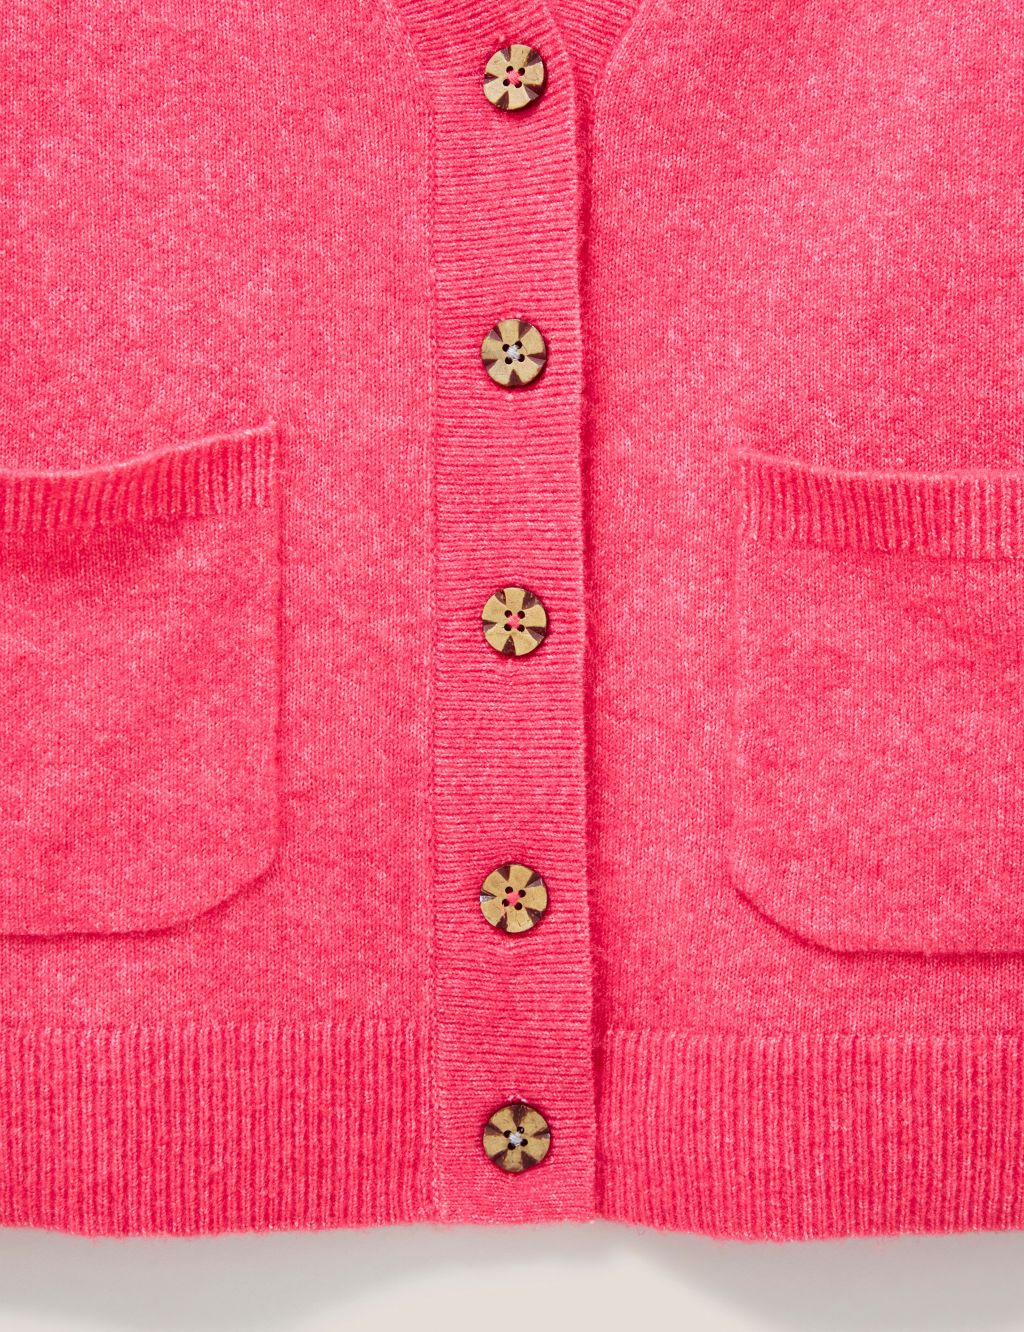 V-Neck Button Front Cardigan image 6